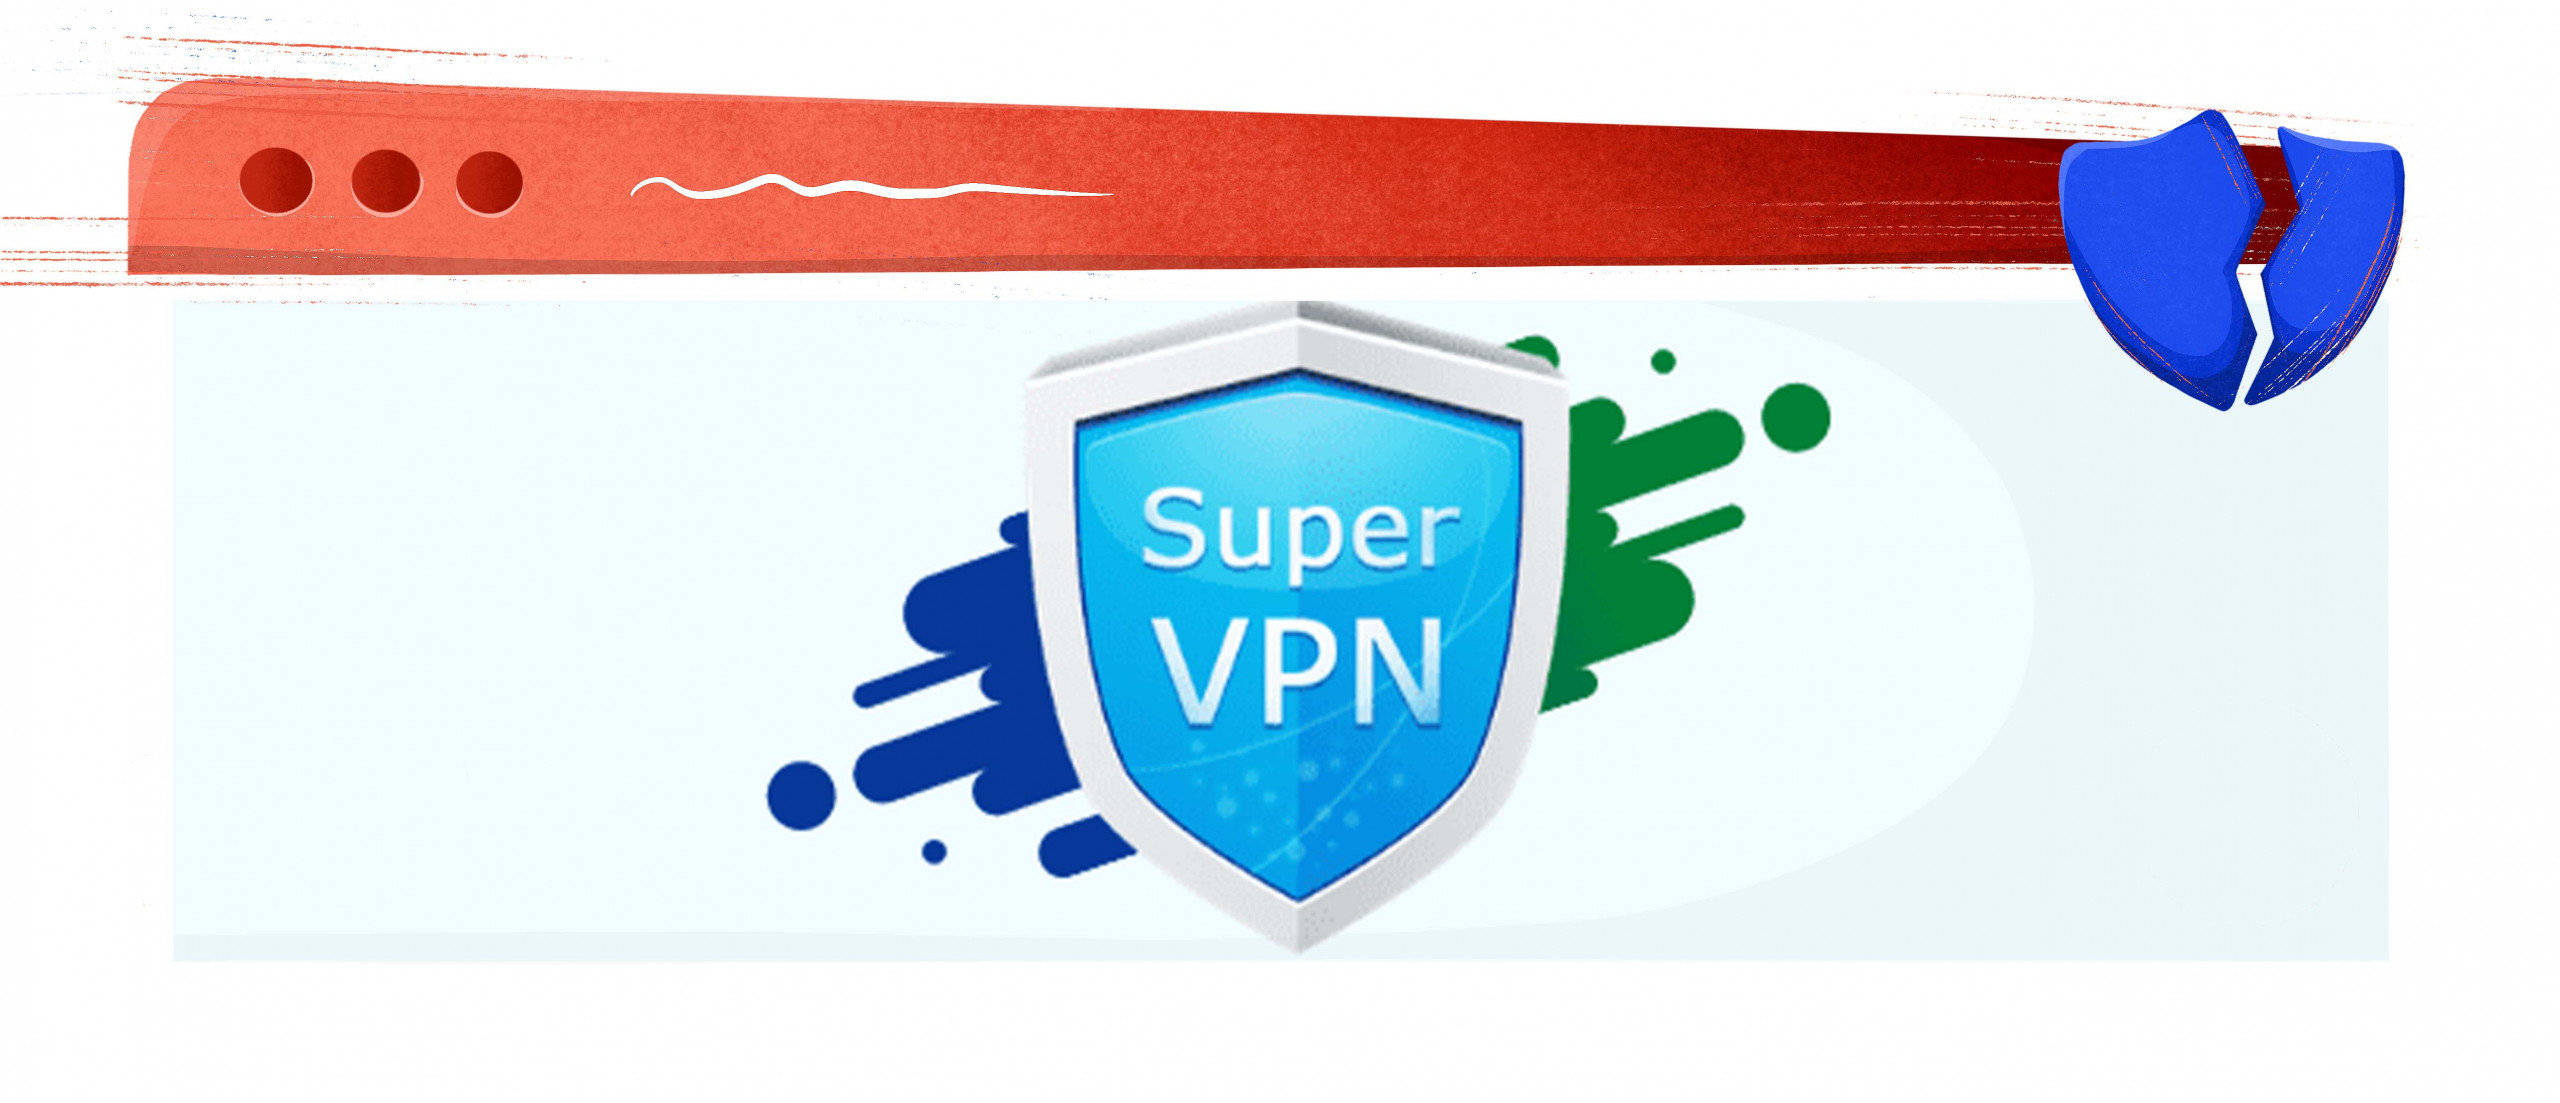 SuperVPN doesn't store user information safely